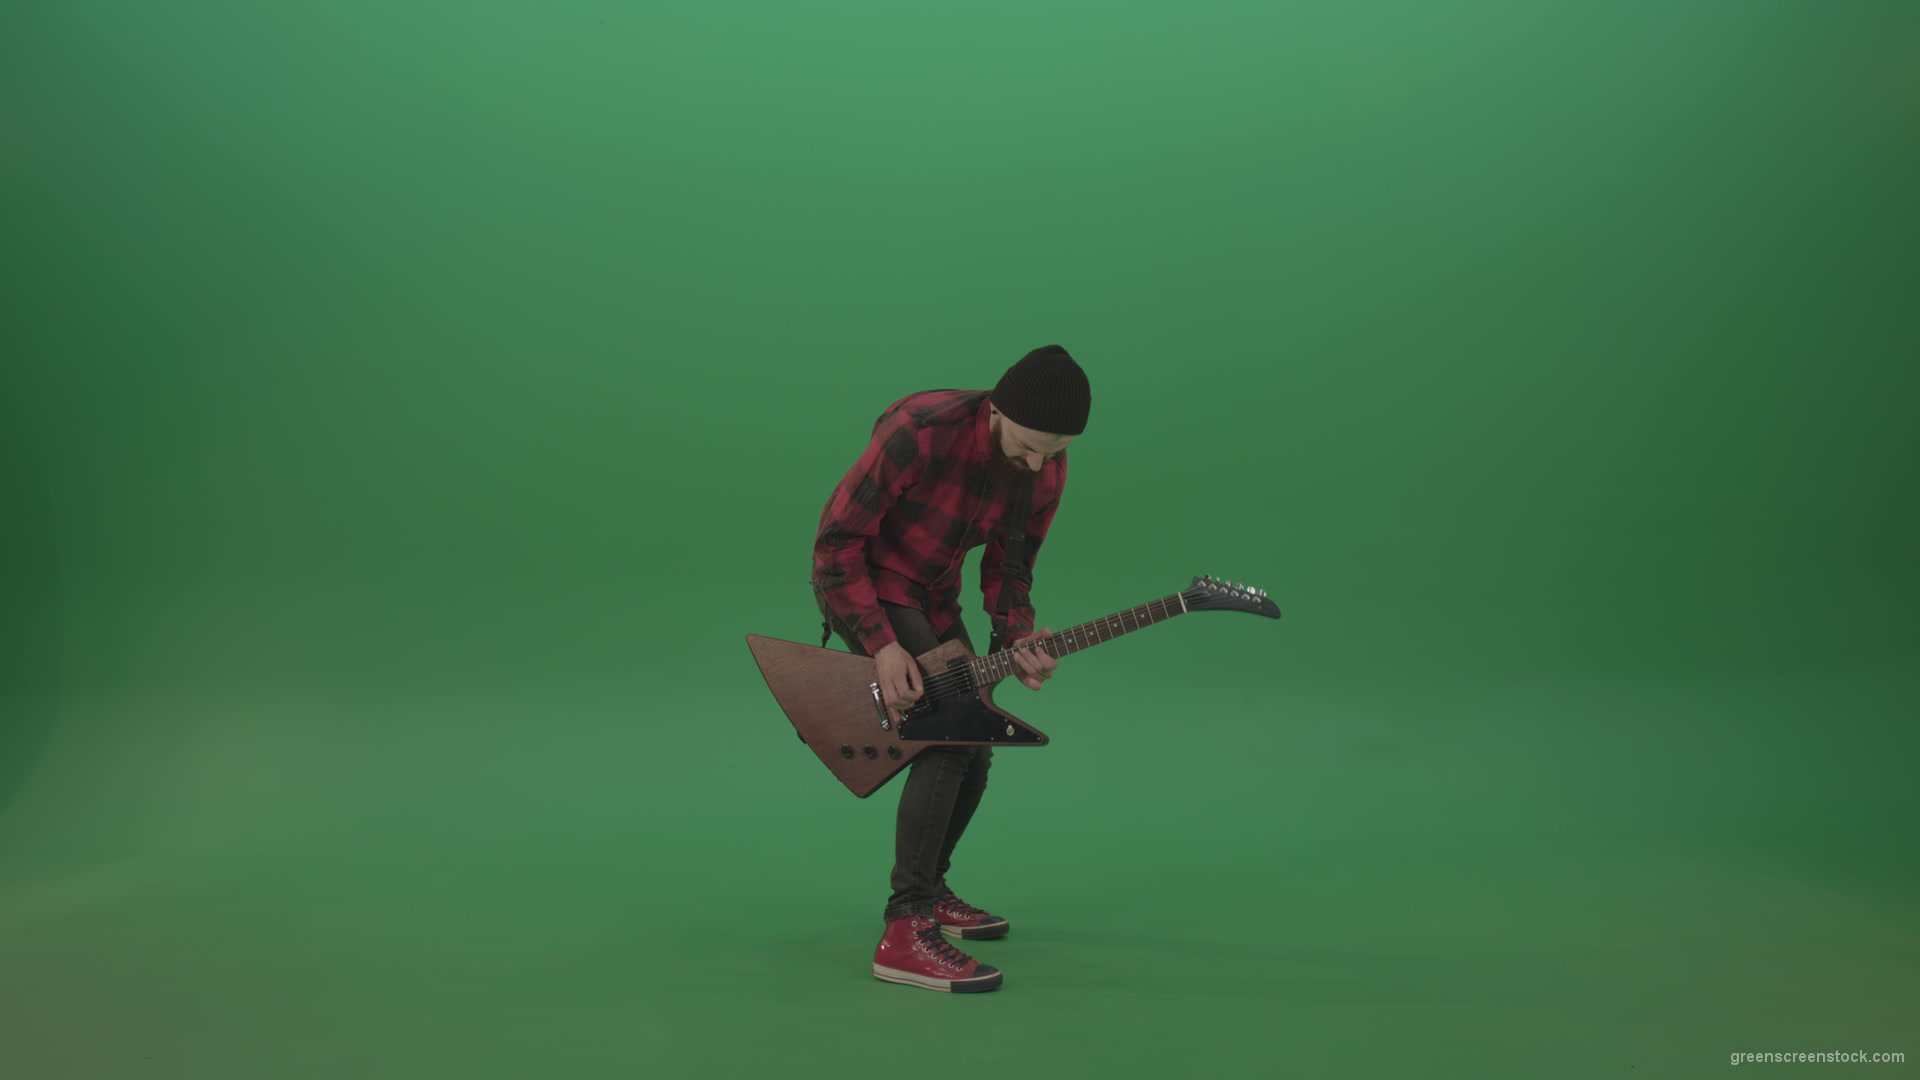 Man-in-red-shirt-play-virtuoso-solo-on-elektro-guitar-on-green-screen_006 Green Screen Stock